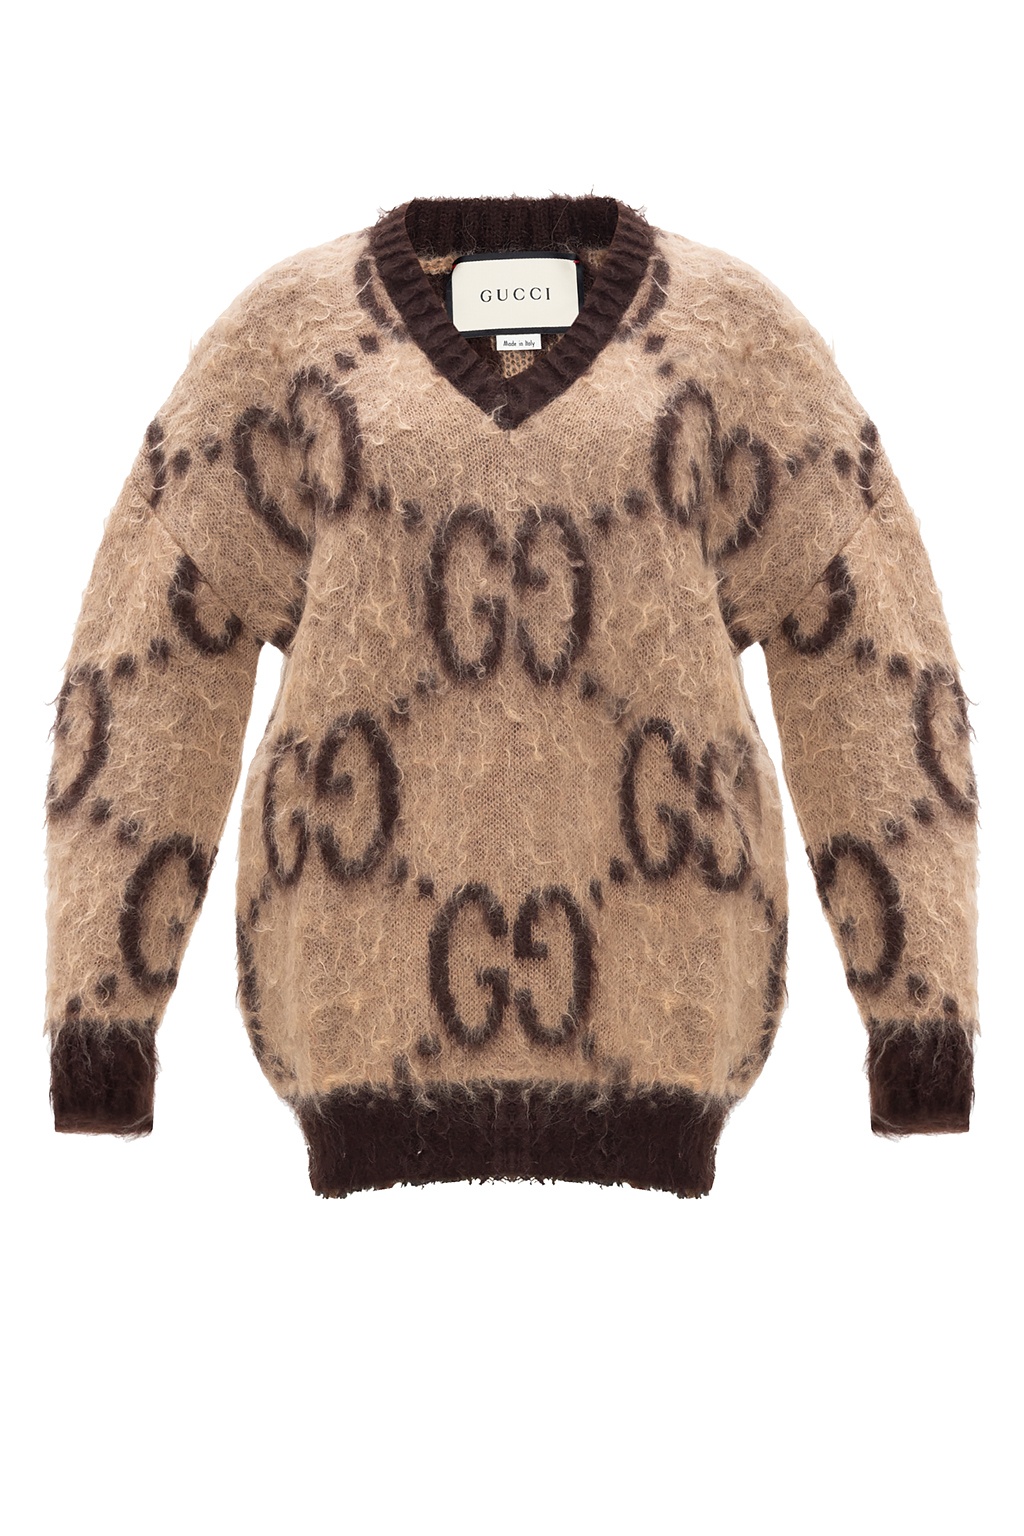 Logo Sweater Gucci Gov Bhutan